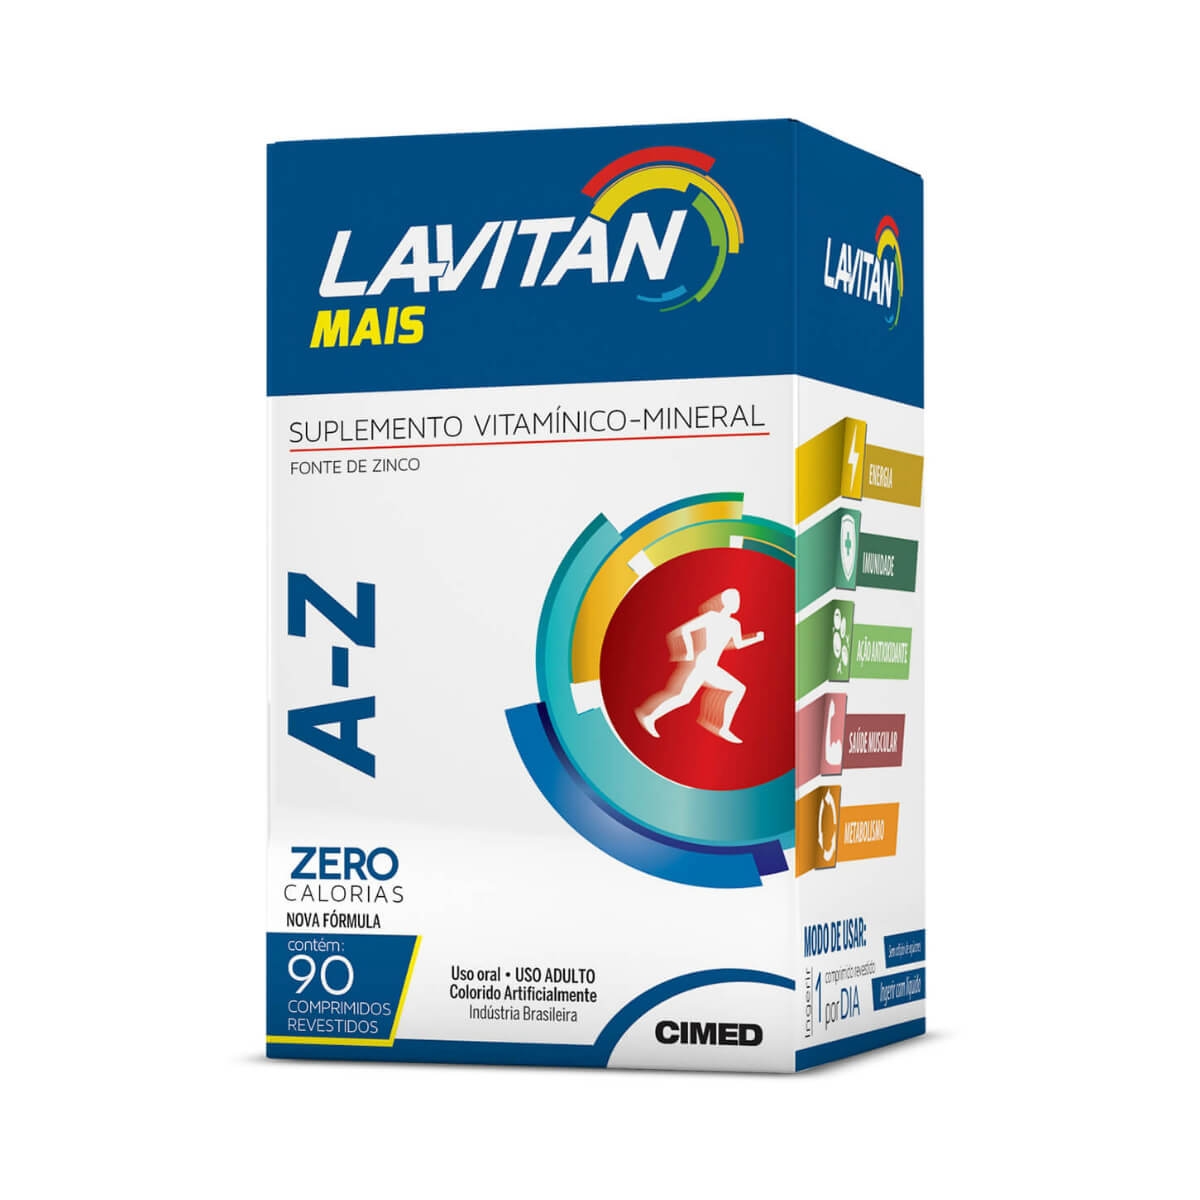 Lavitan A-Z Mais Cimed 90 Comprimidos Revestidos